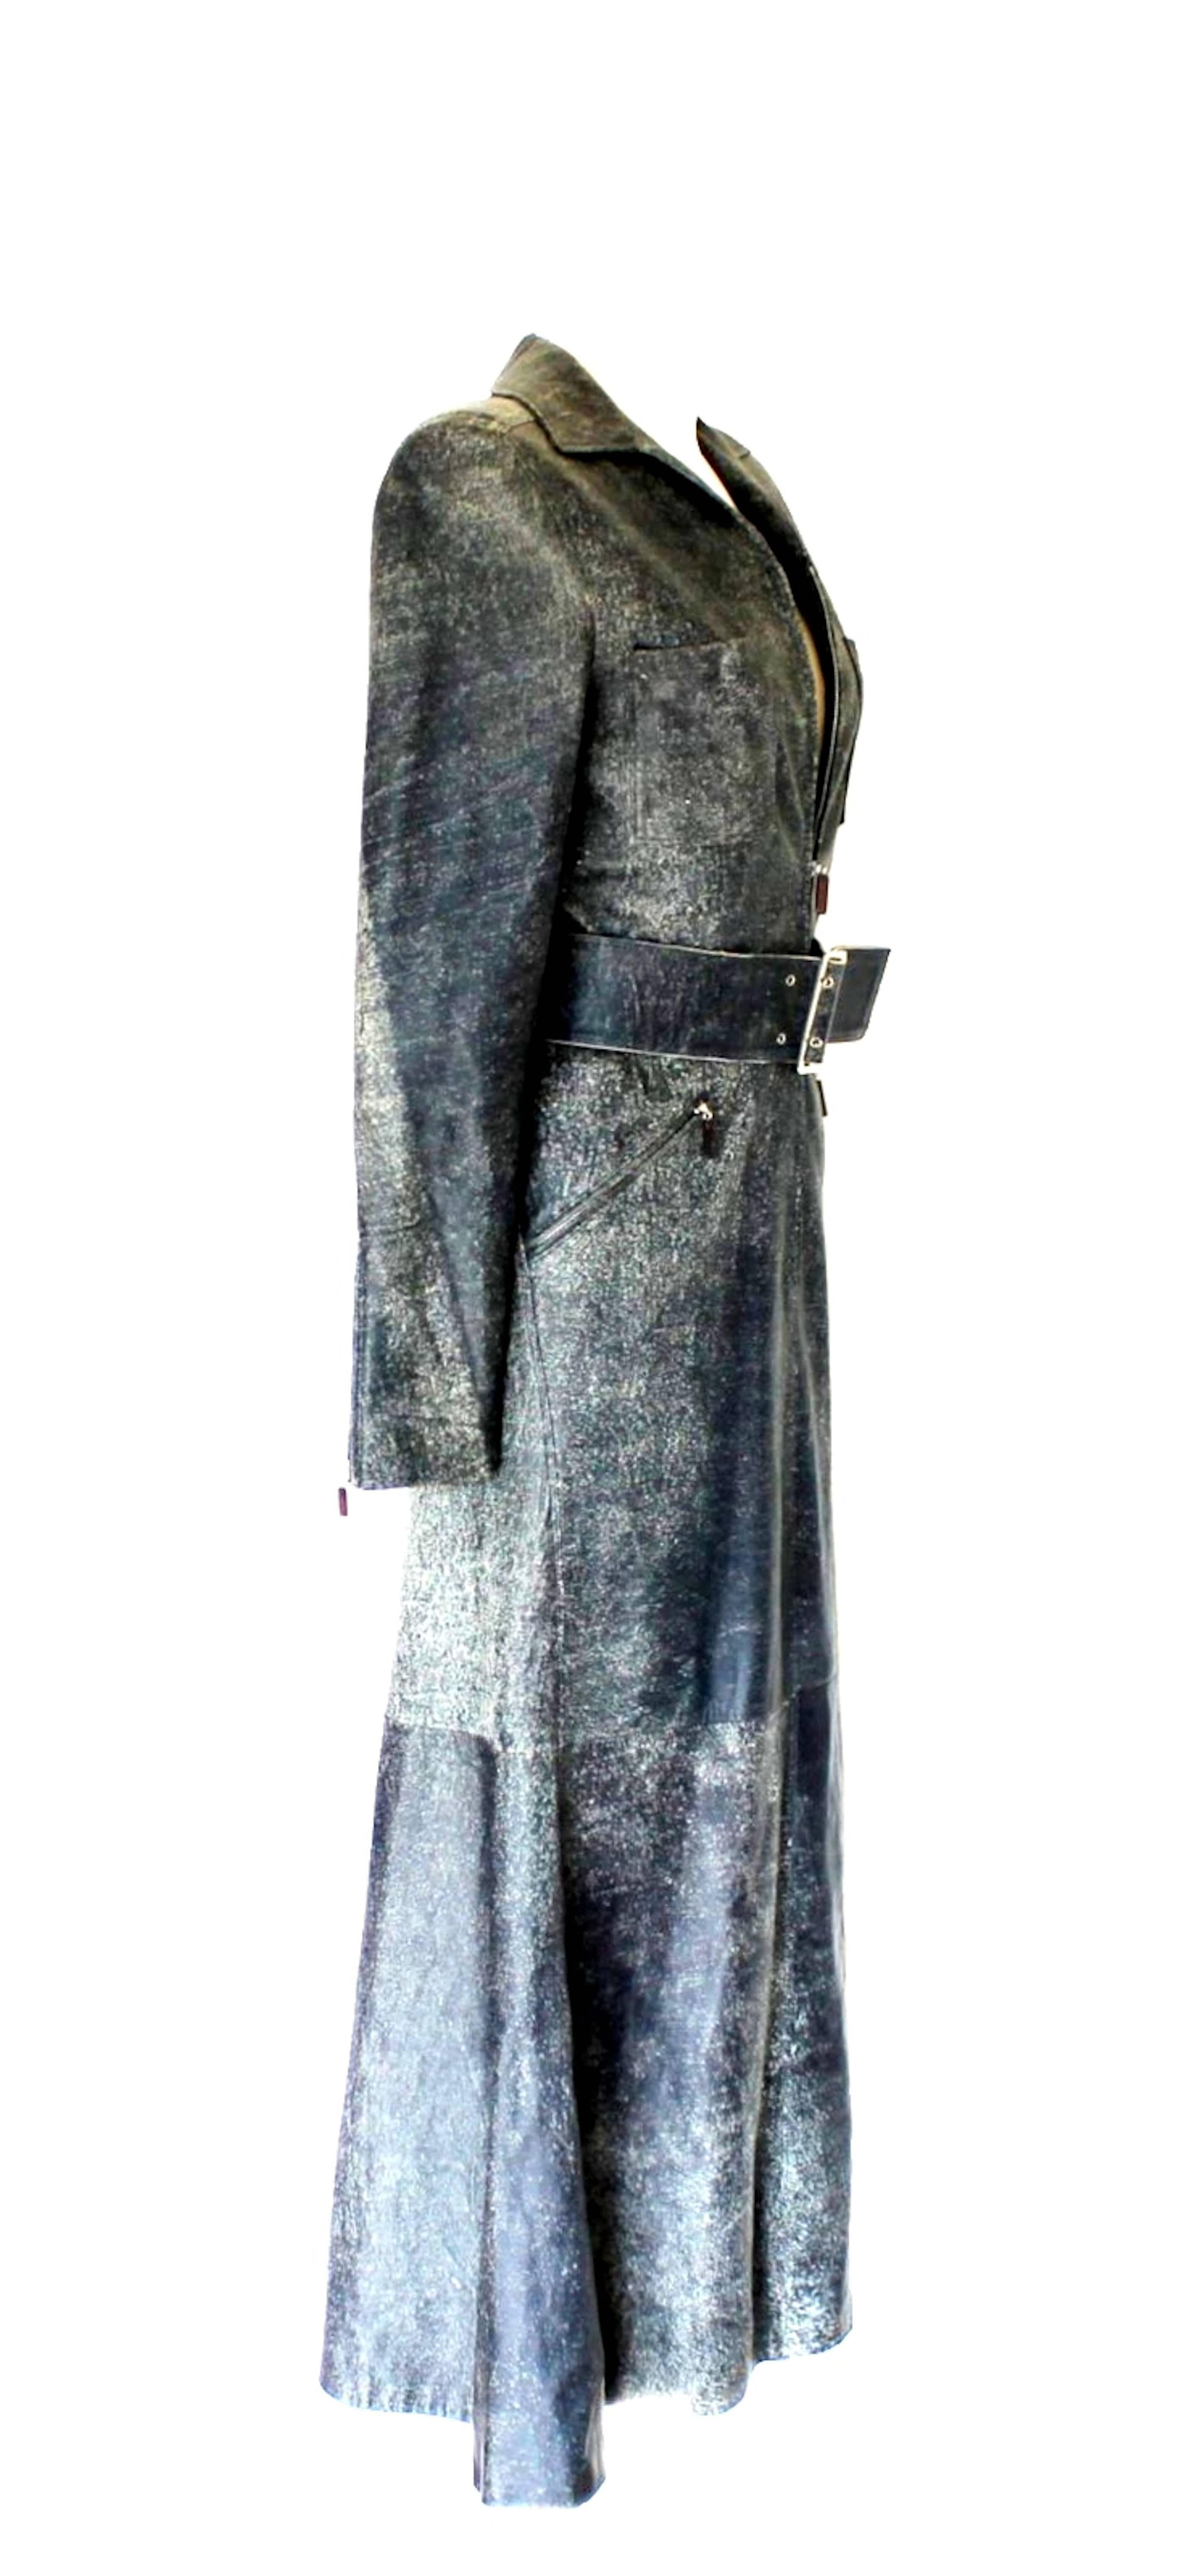 GIANNI VERSACE Demin/Jeans-Stil Distressed Lederkleid im Distressed-Stil 2001 (Grau) im Angebot